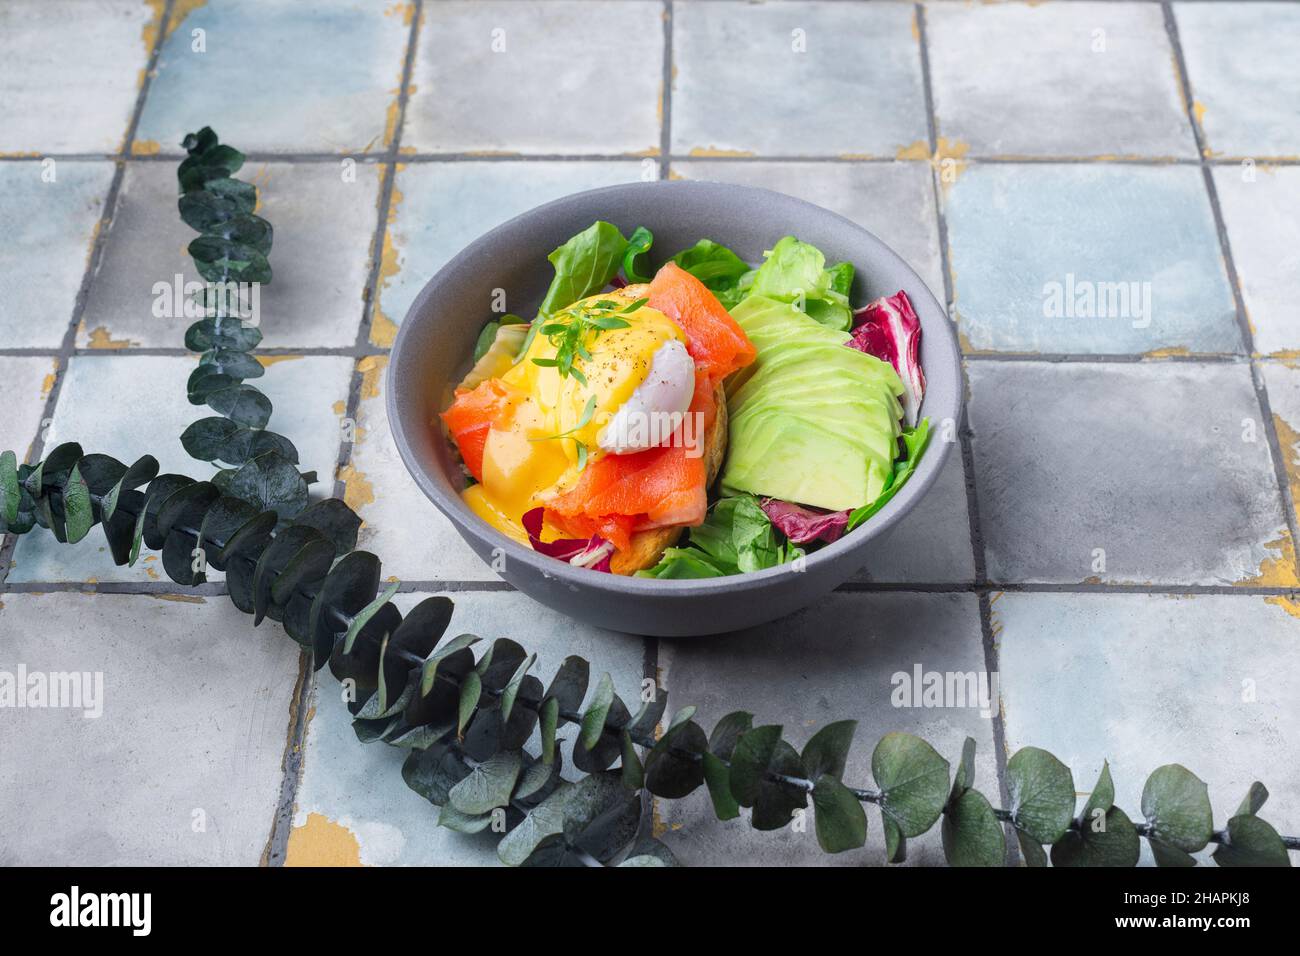 Delicious breakfast, brunch - poached egg, salmon, avocado, arugula salad on a tile background Stock Photo